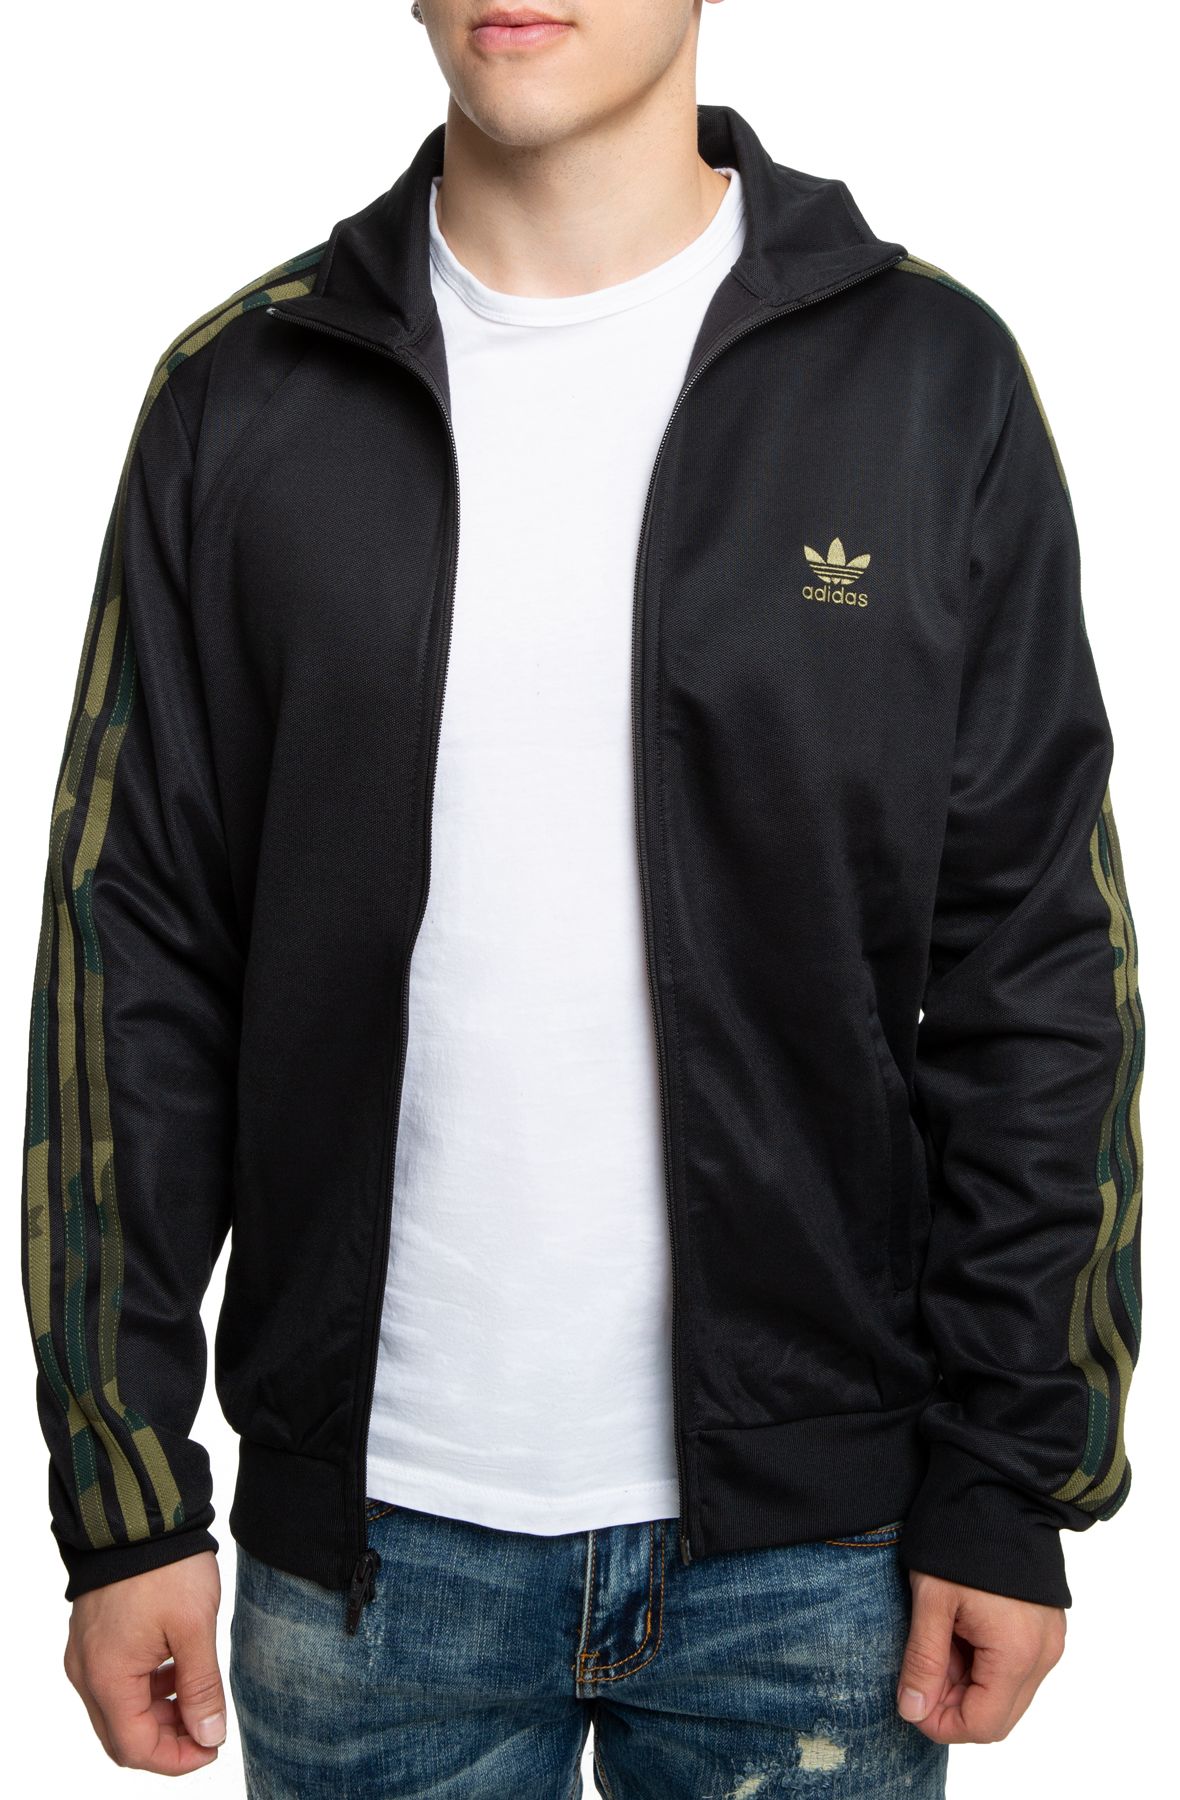 adidas Originals firebird track jacket in black with three stripes